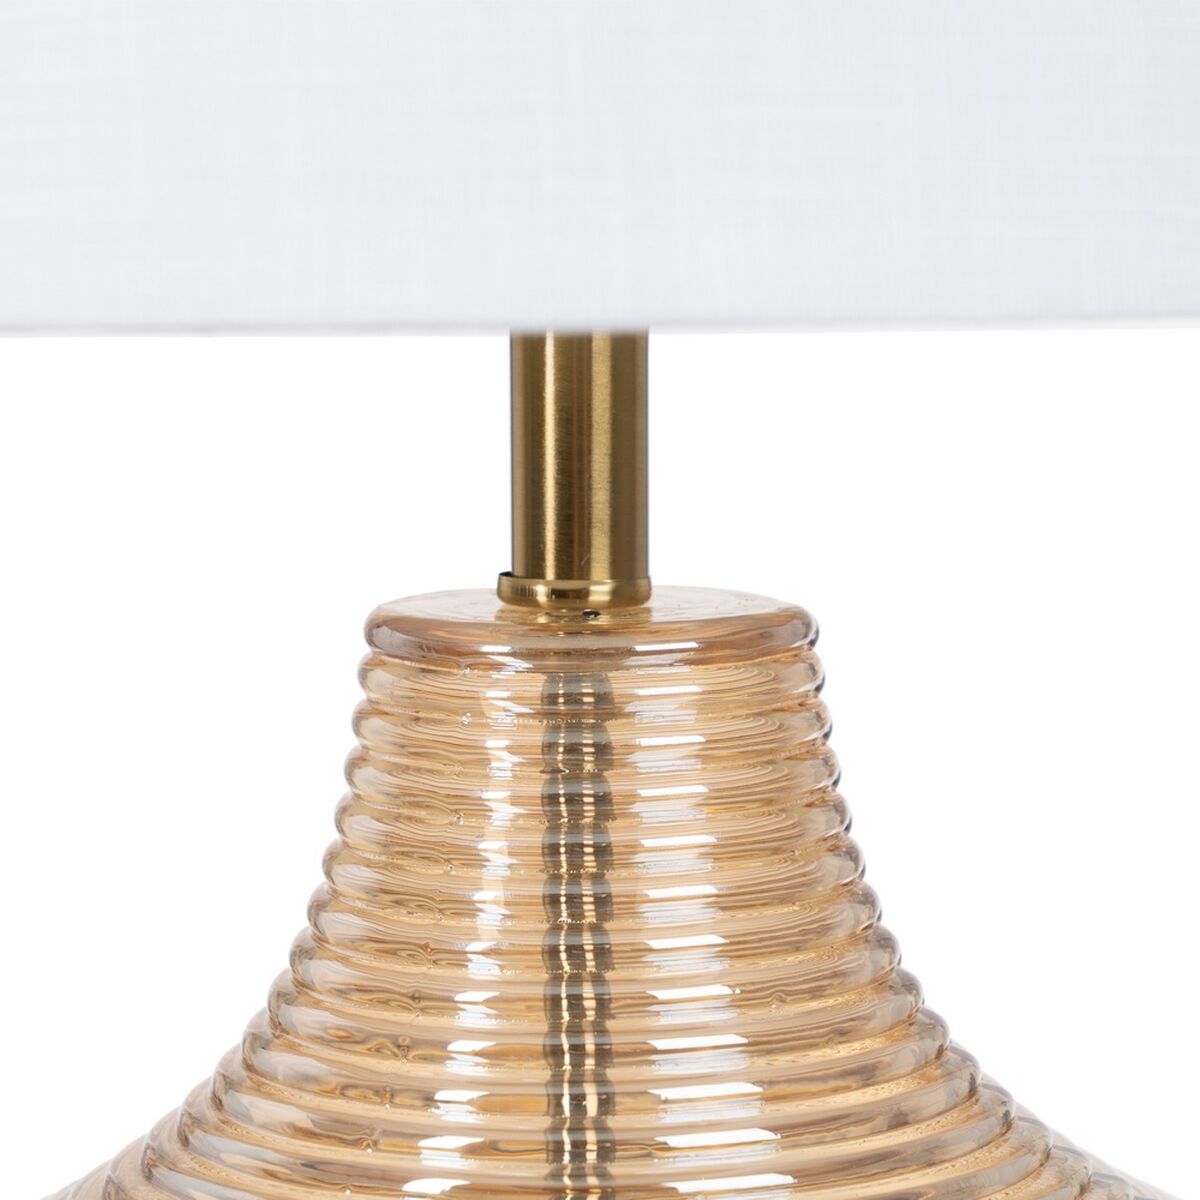 Table lamp beige transparent